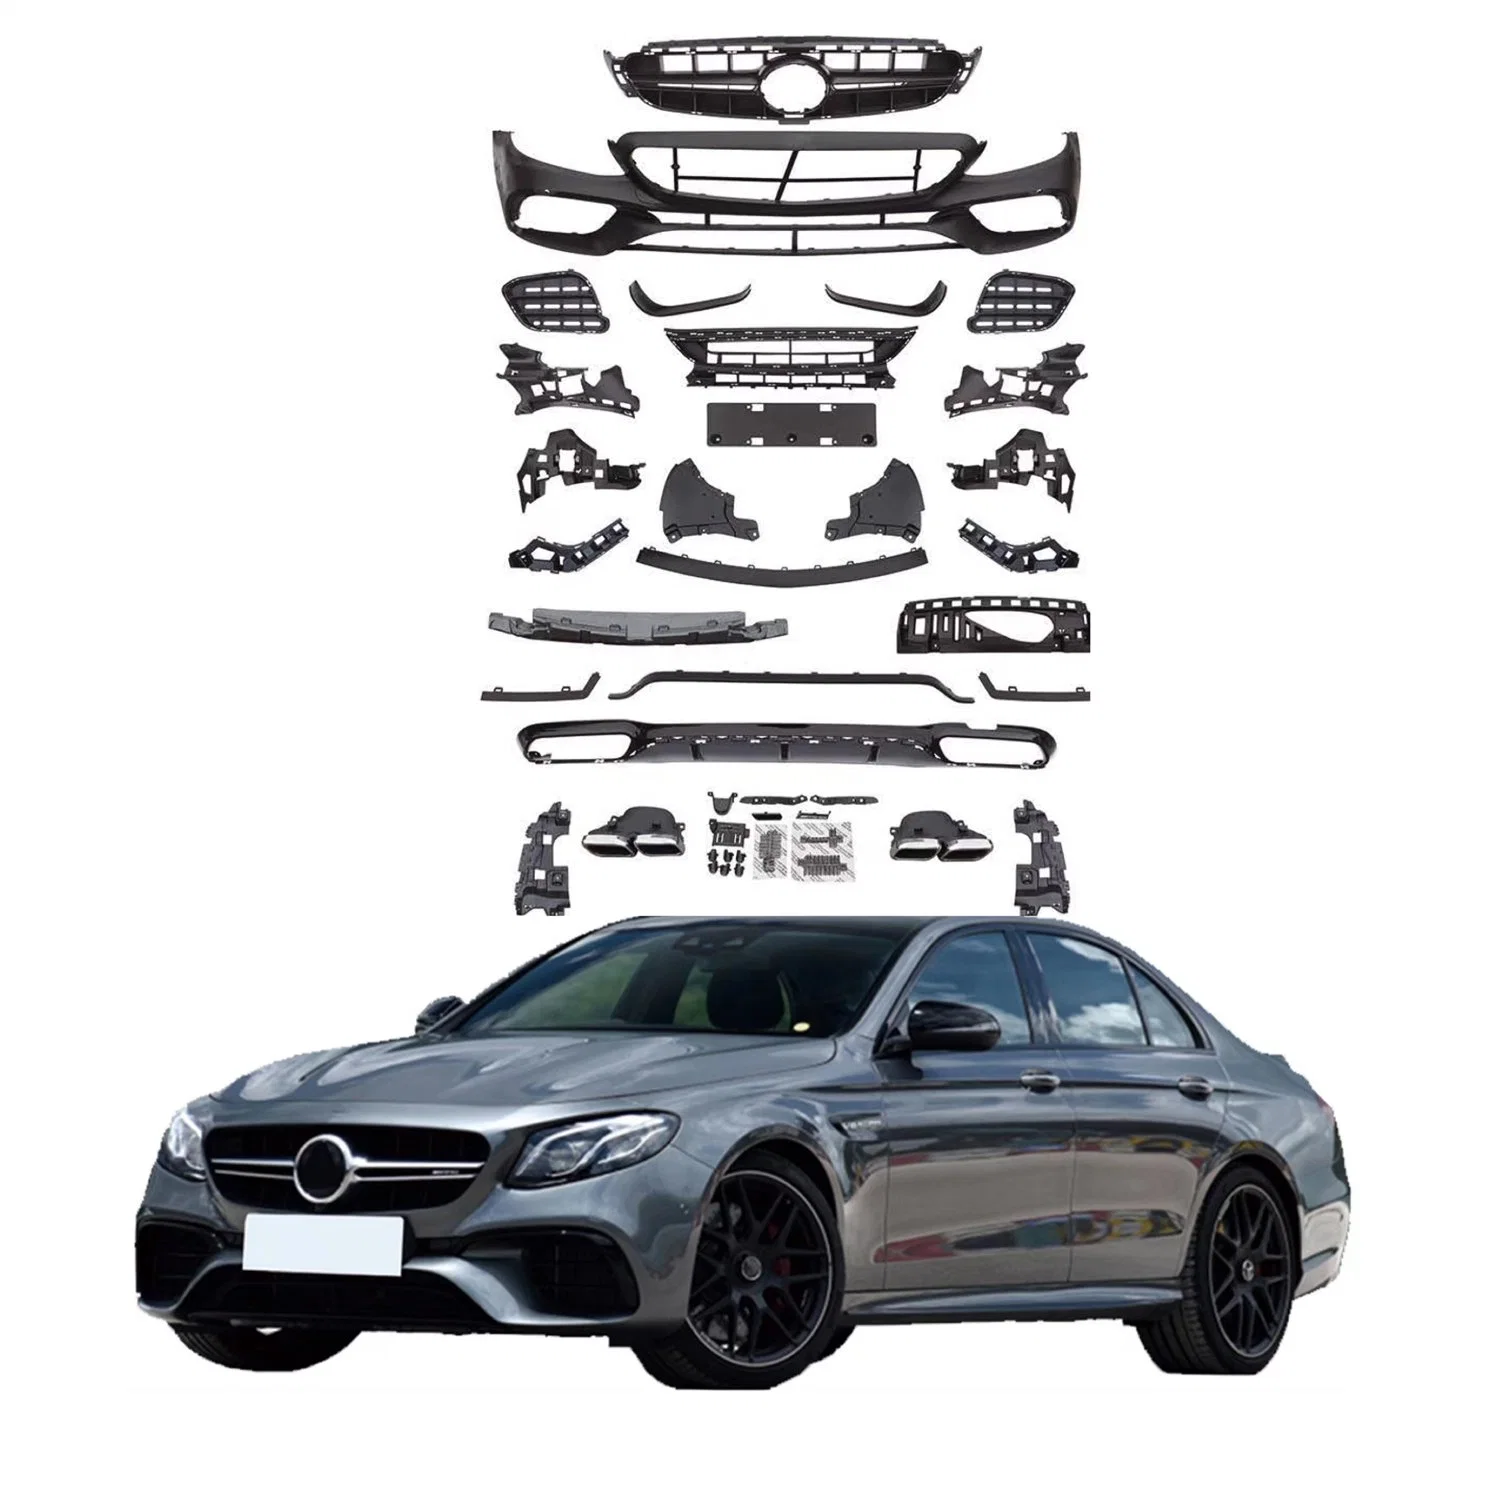 2016 2020 Modificación de vehículos Repuestos para Mercedes Benz Clase E W213 de la Cirugía Estética E63 AMG Kit de carrocería